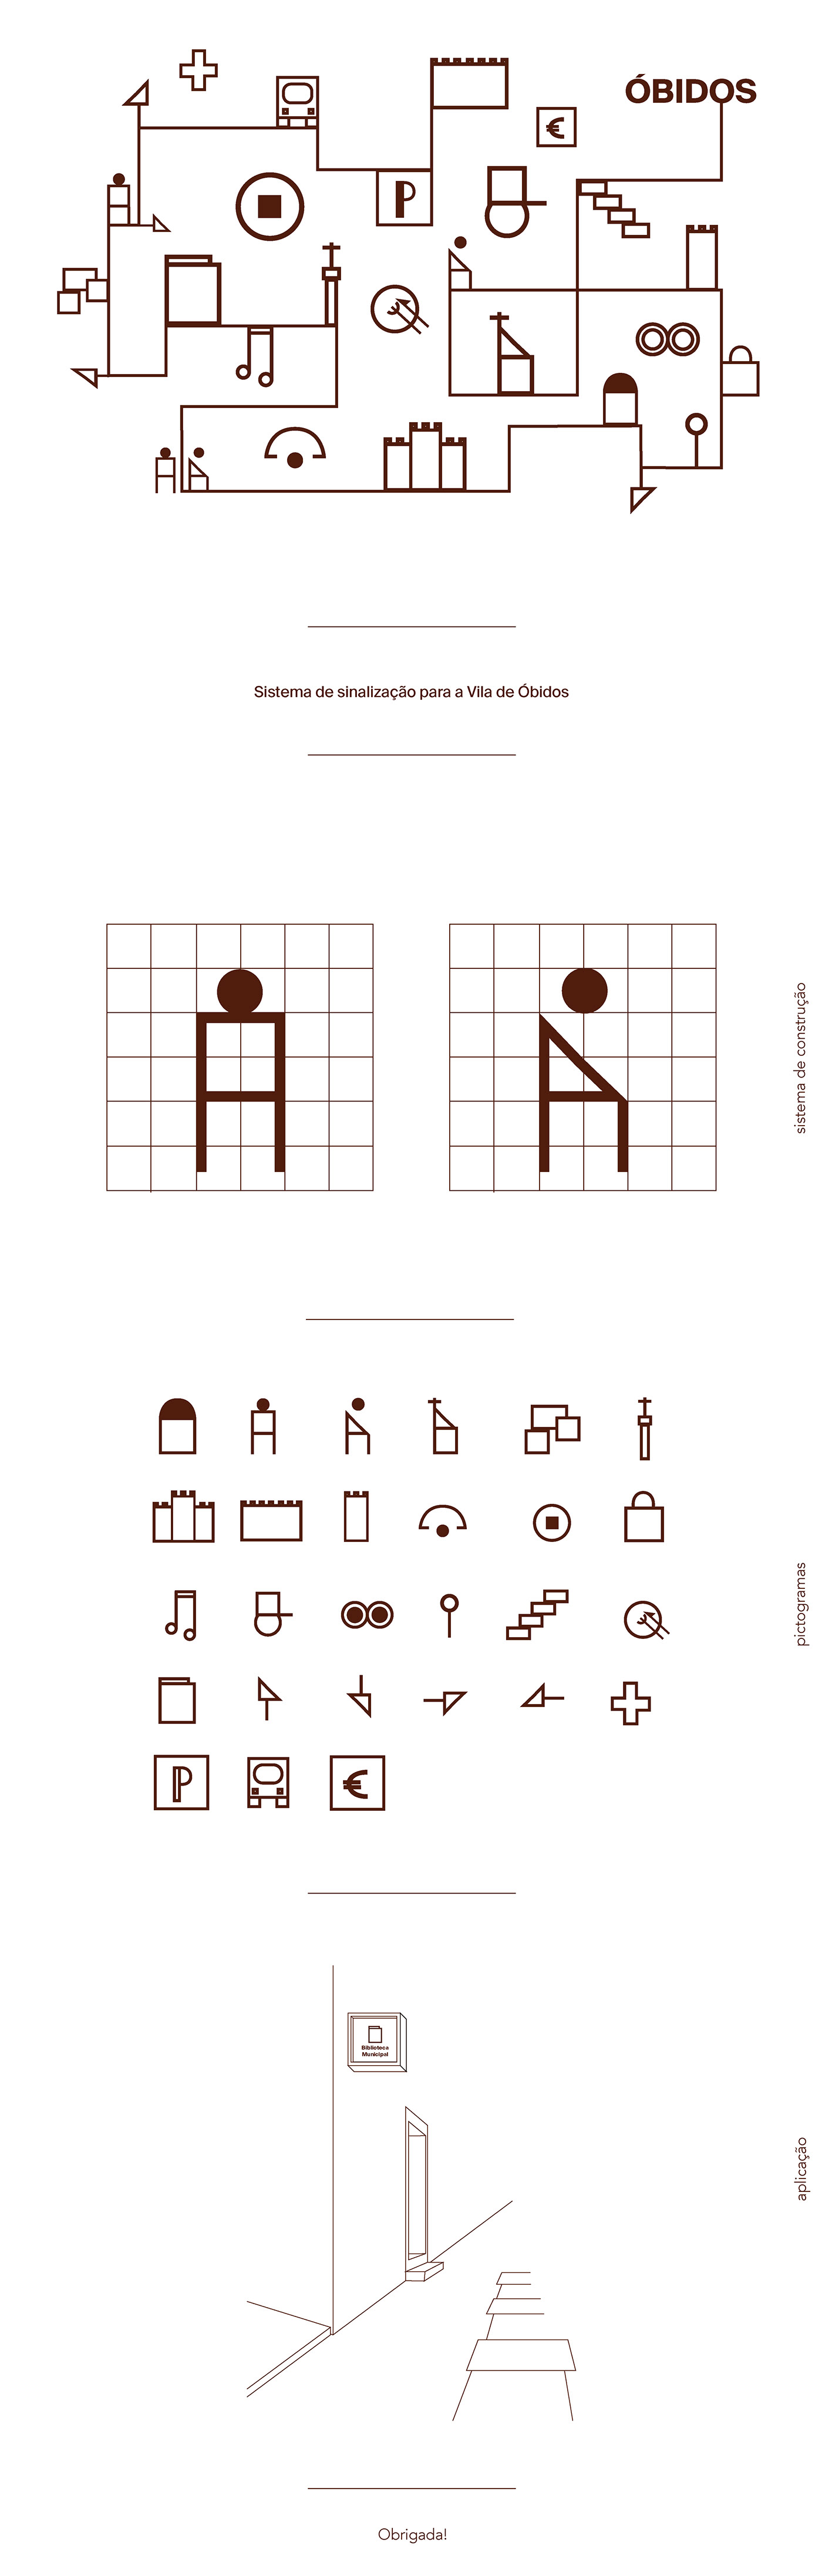 Icones sinalética design geometrico pictogramas